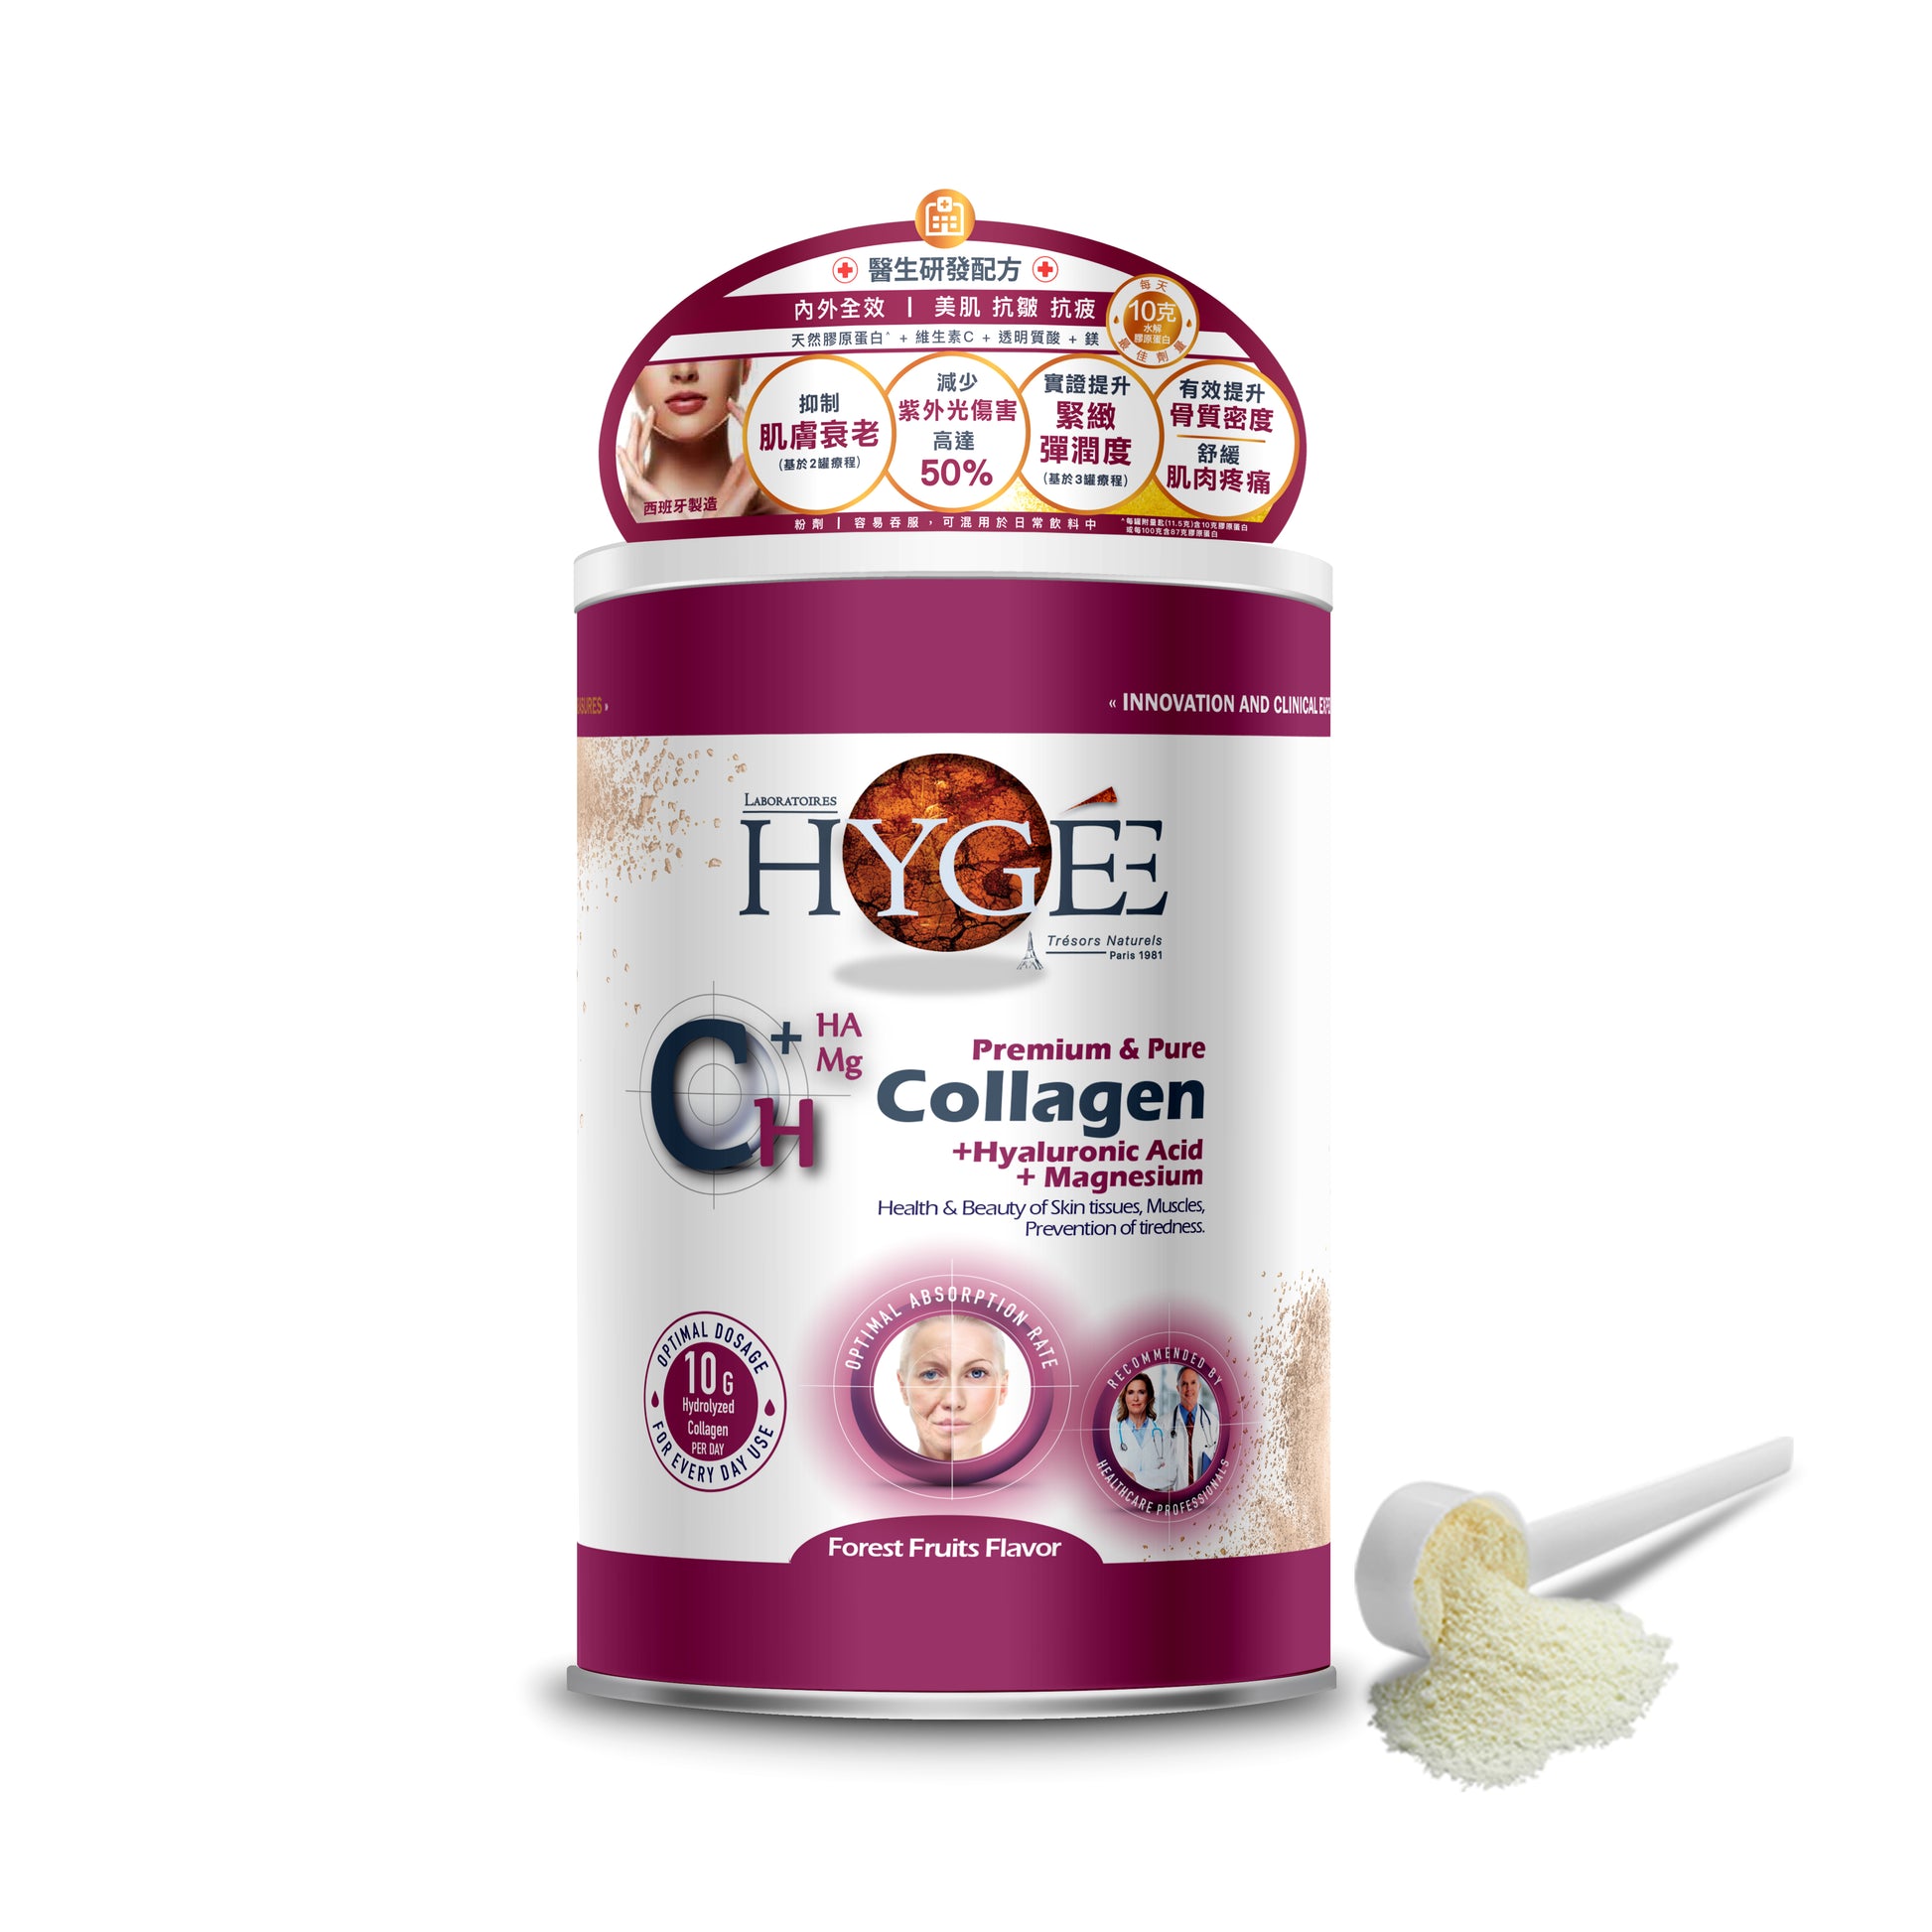 HYGEE CH+ Collagen Beauty Formula